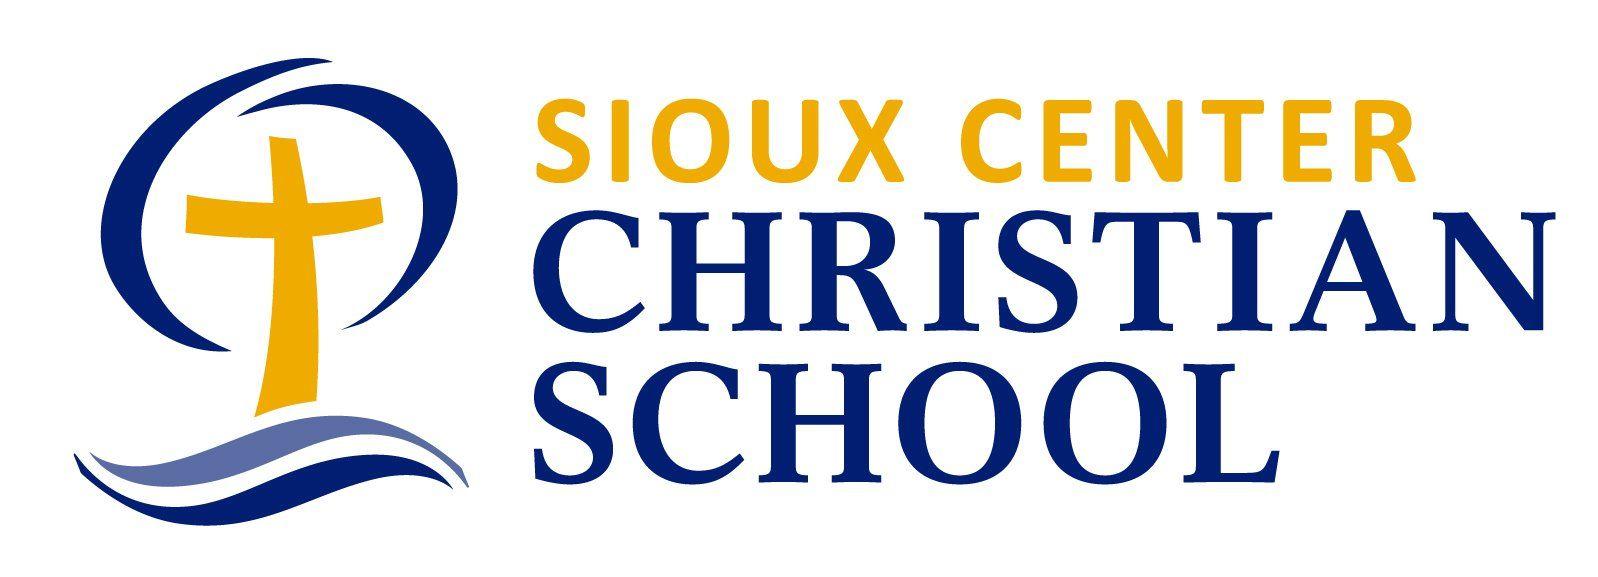 Christain Logo - Our Logos - Sioux Center Christian School